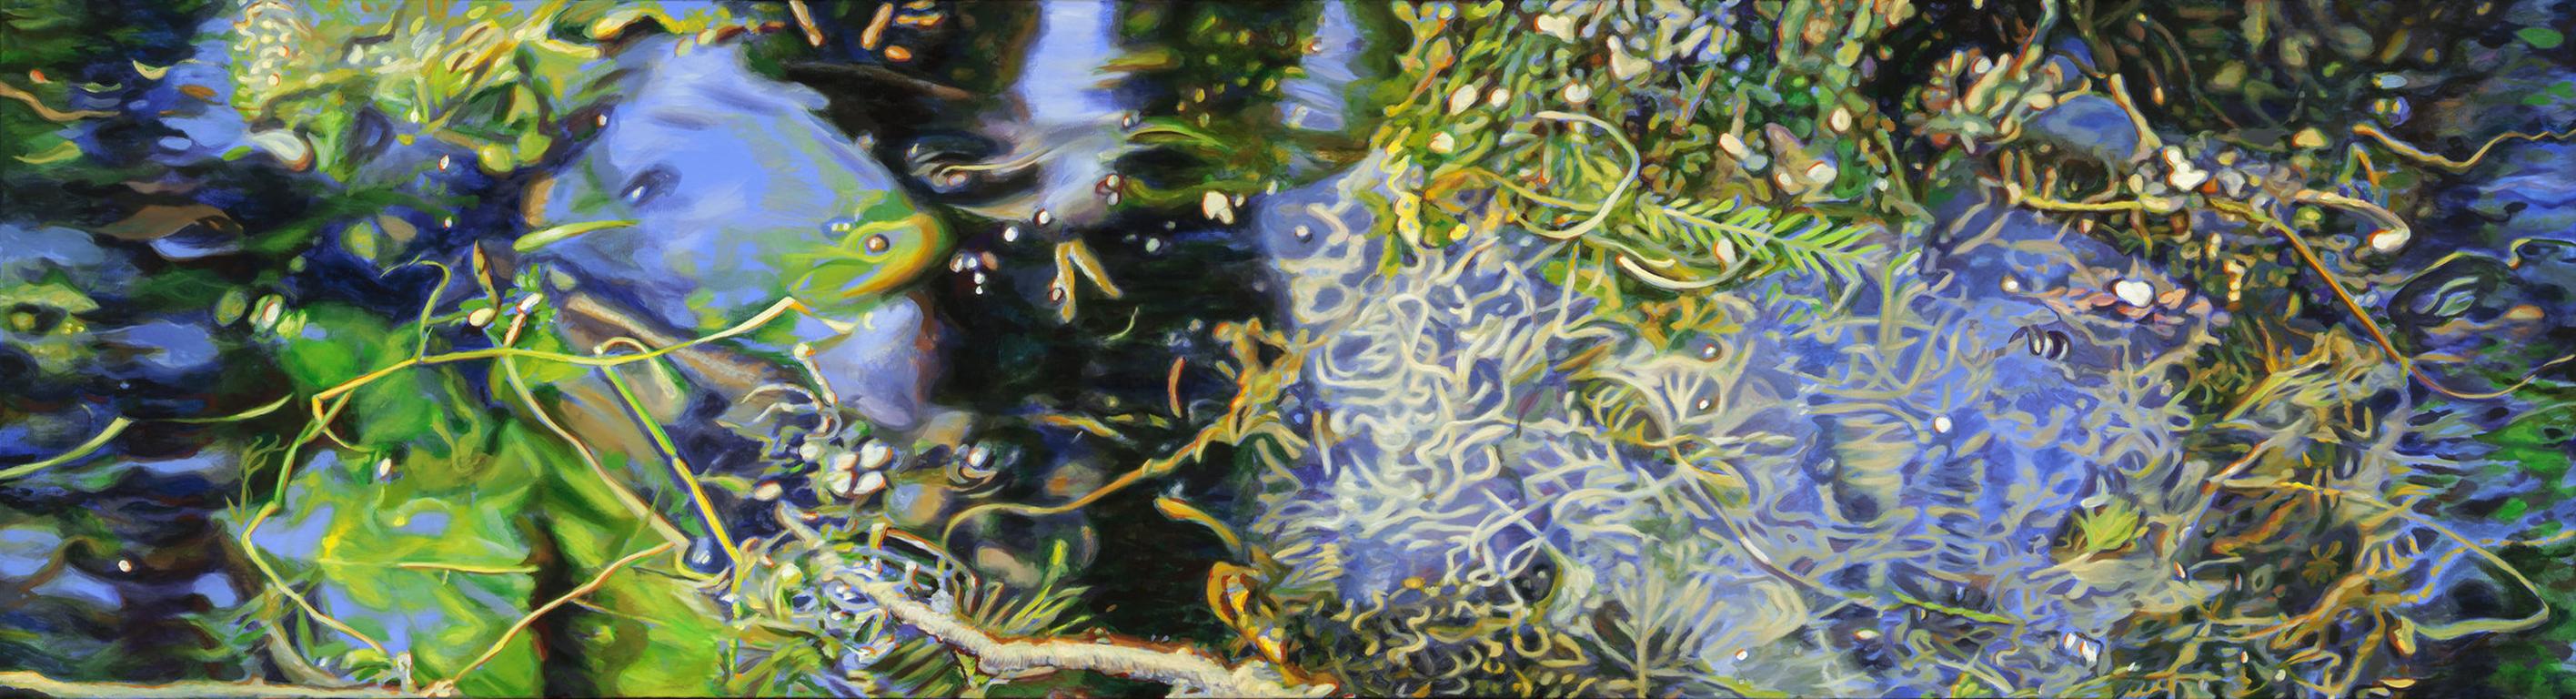 Adrian Deckbar Landscape Painting - Floating